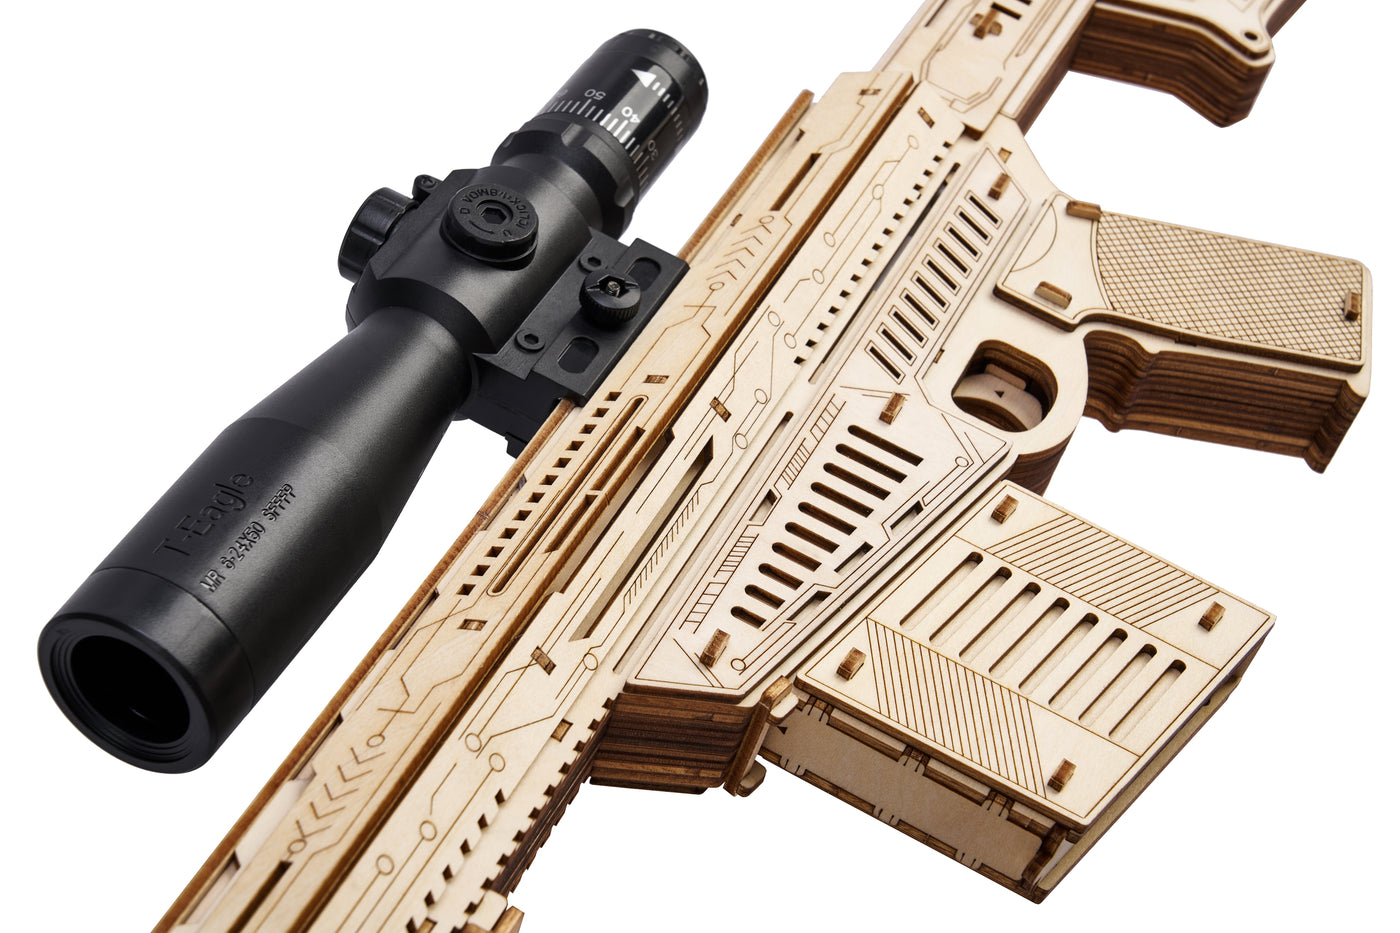 rokrgeek ba-t sniper 3d wooden puzzle